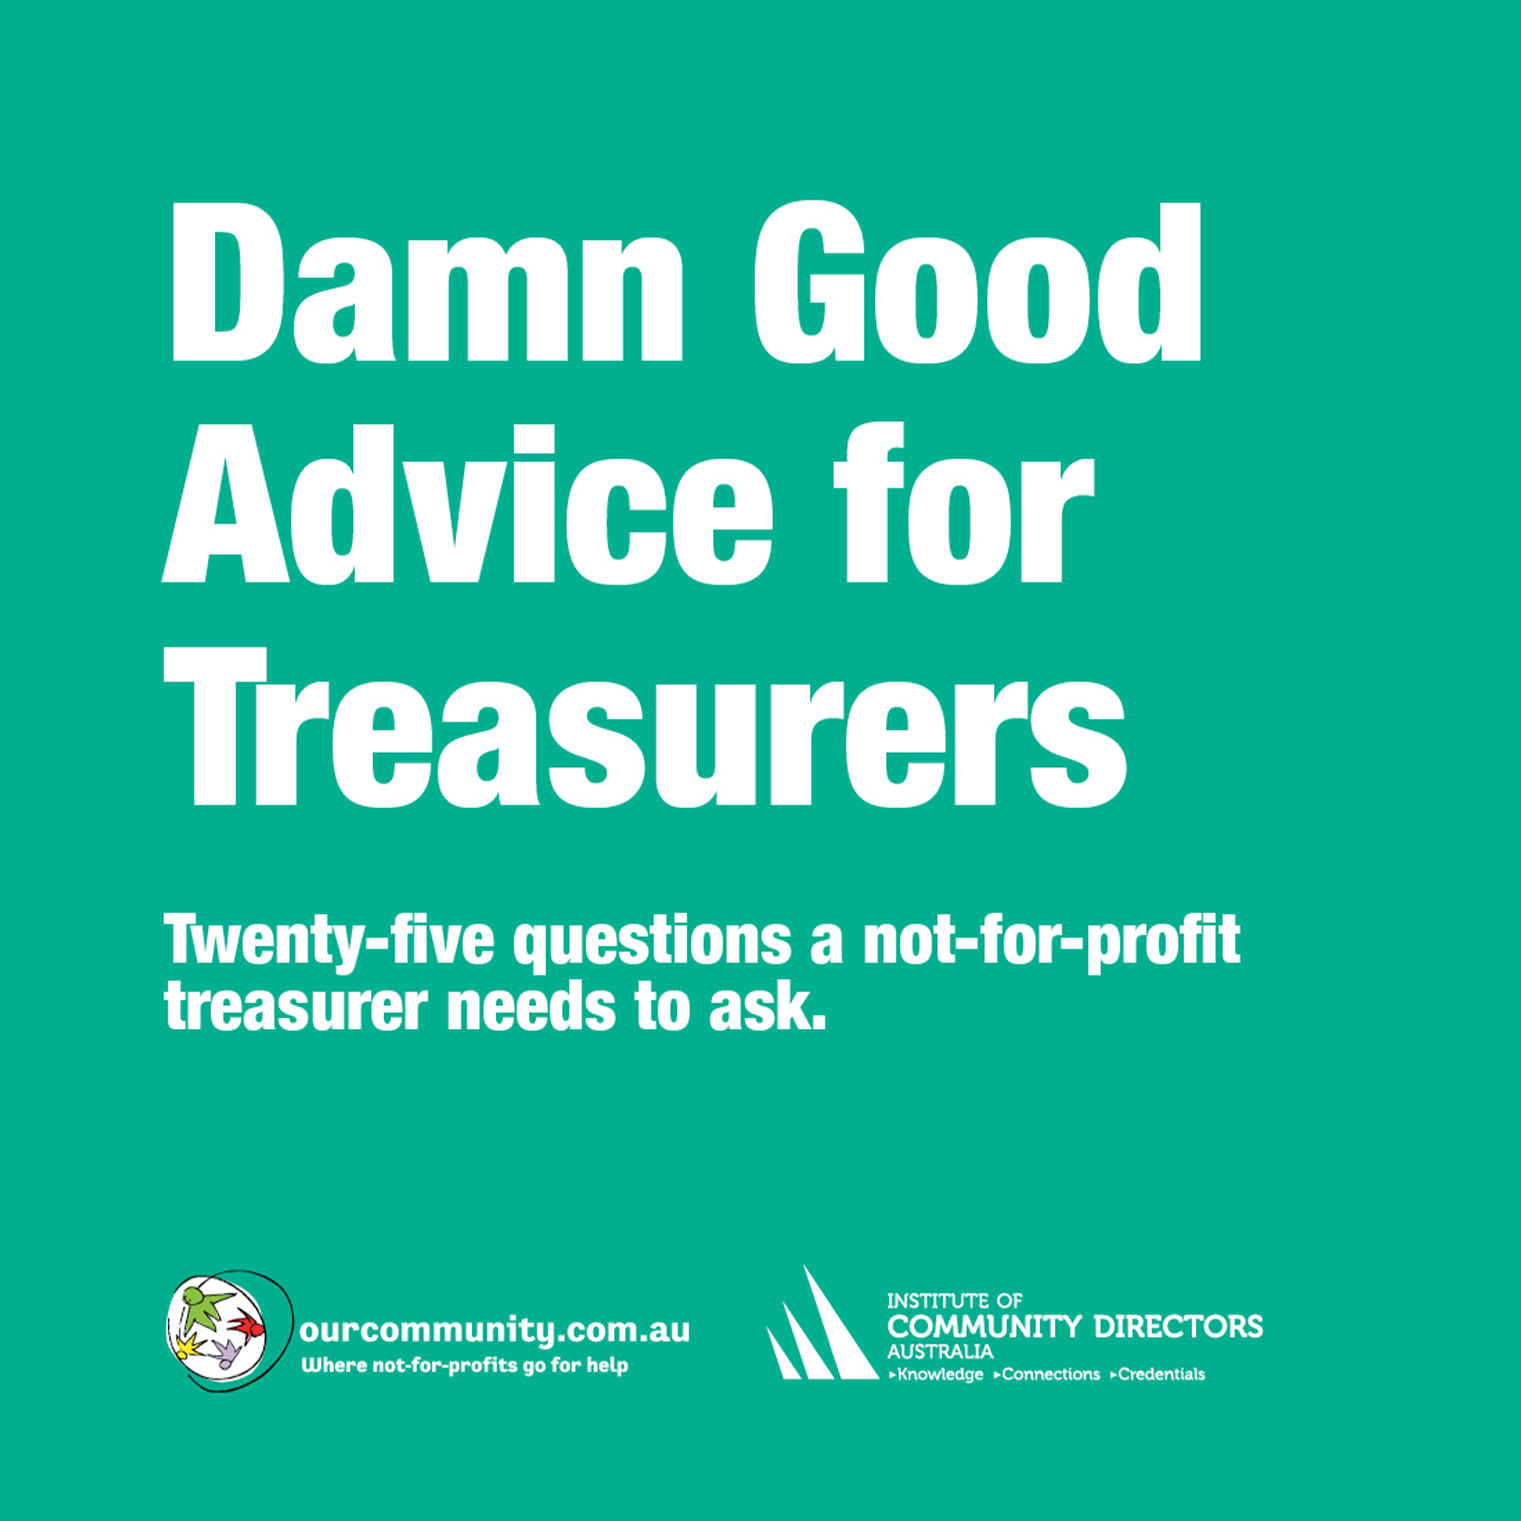 Damn Good Advice for Treasurers